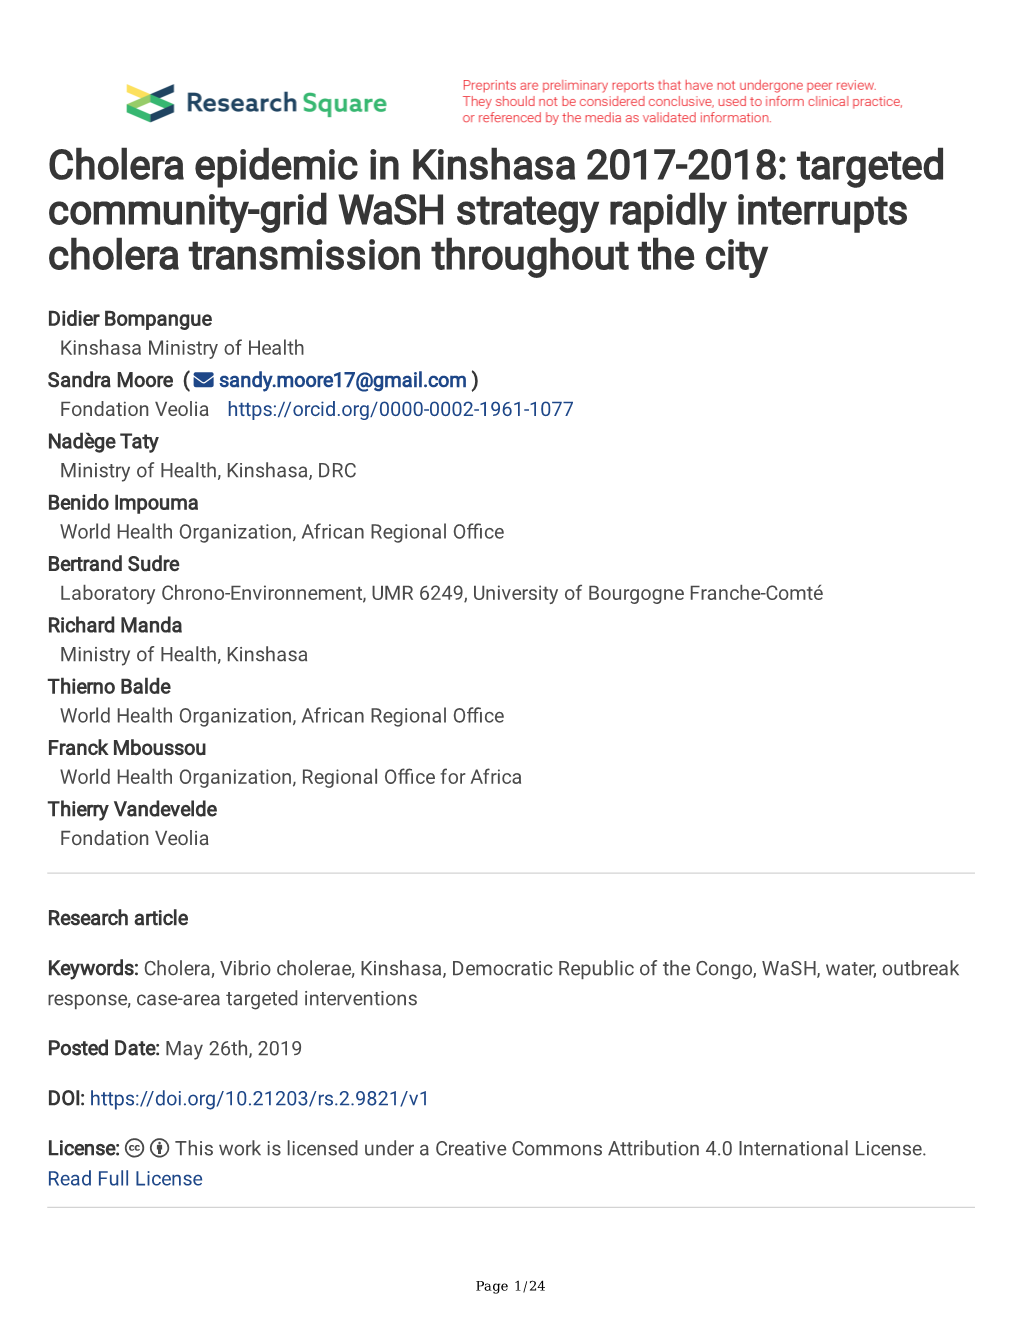 Cholera Epidemic in Kinshasa 2017-2018: Targeted Community-Grid Wash Strategy Rapidly Interrupts Cholera Transmission Throughout the City